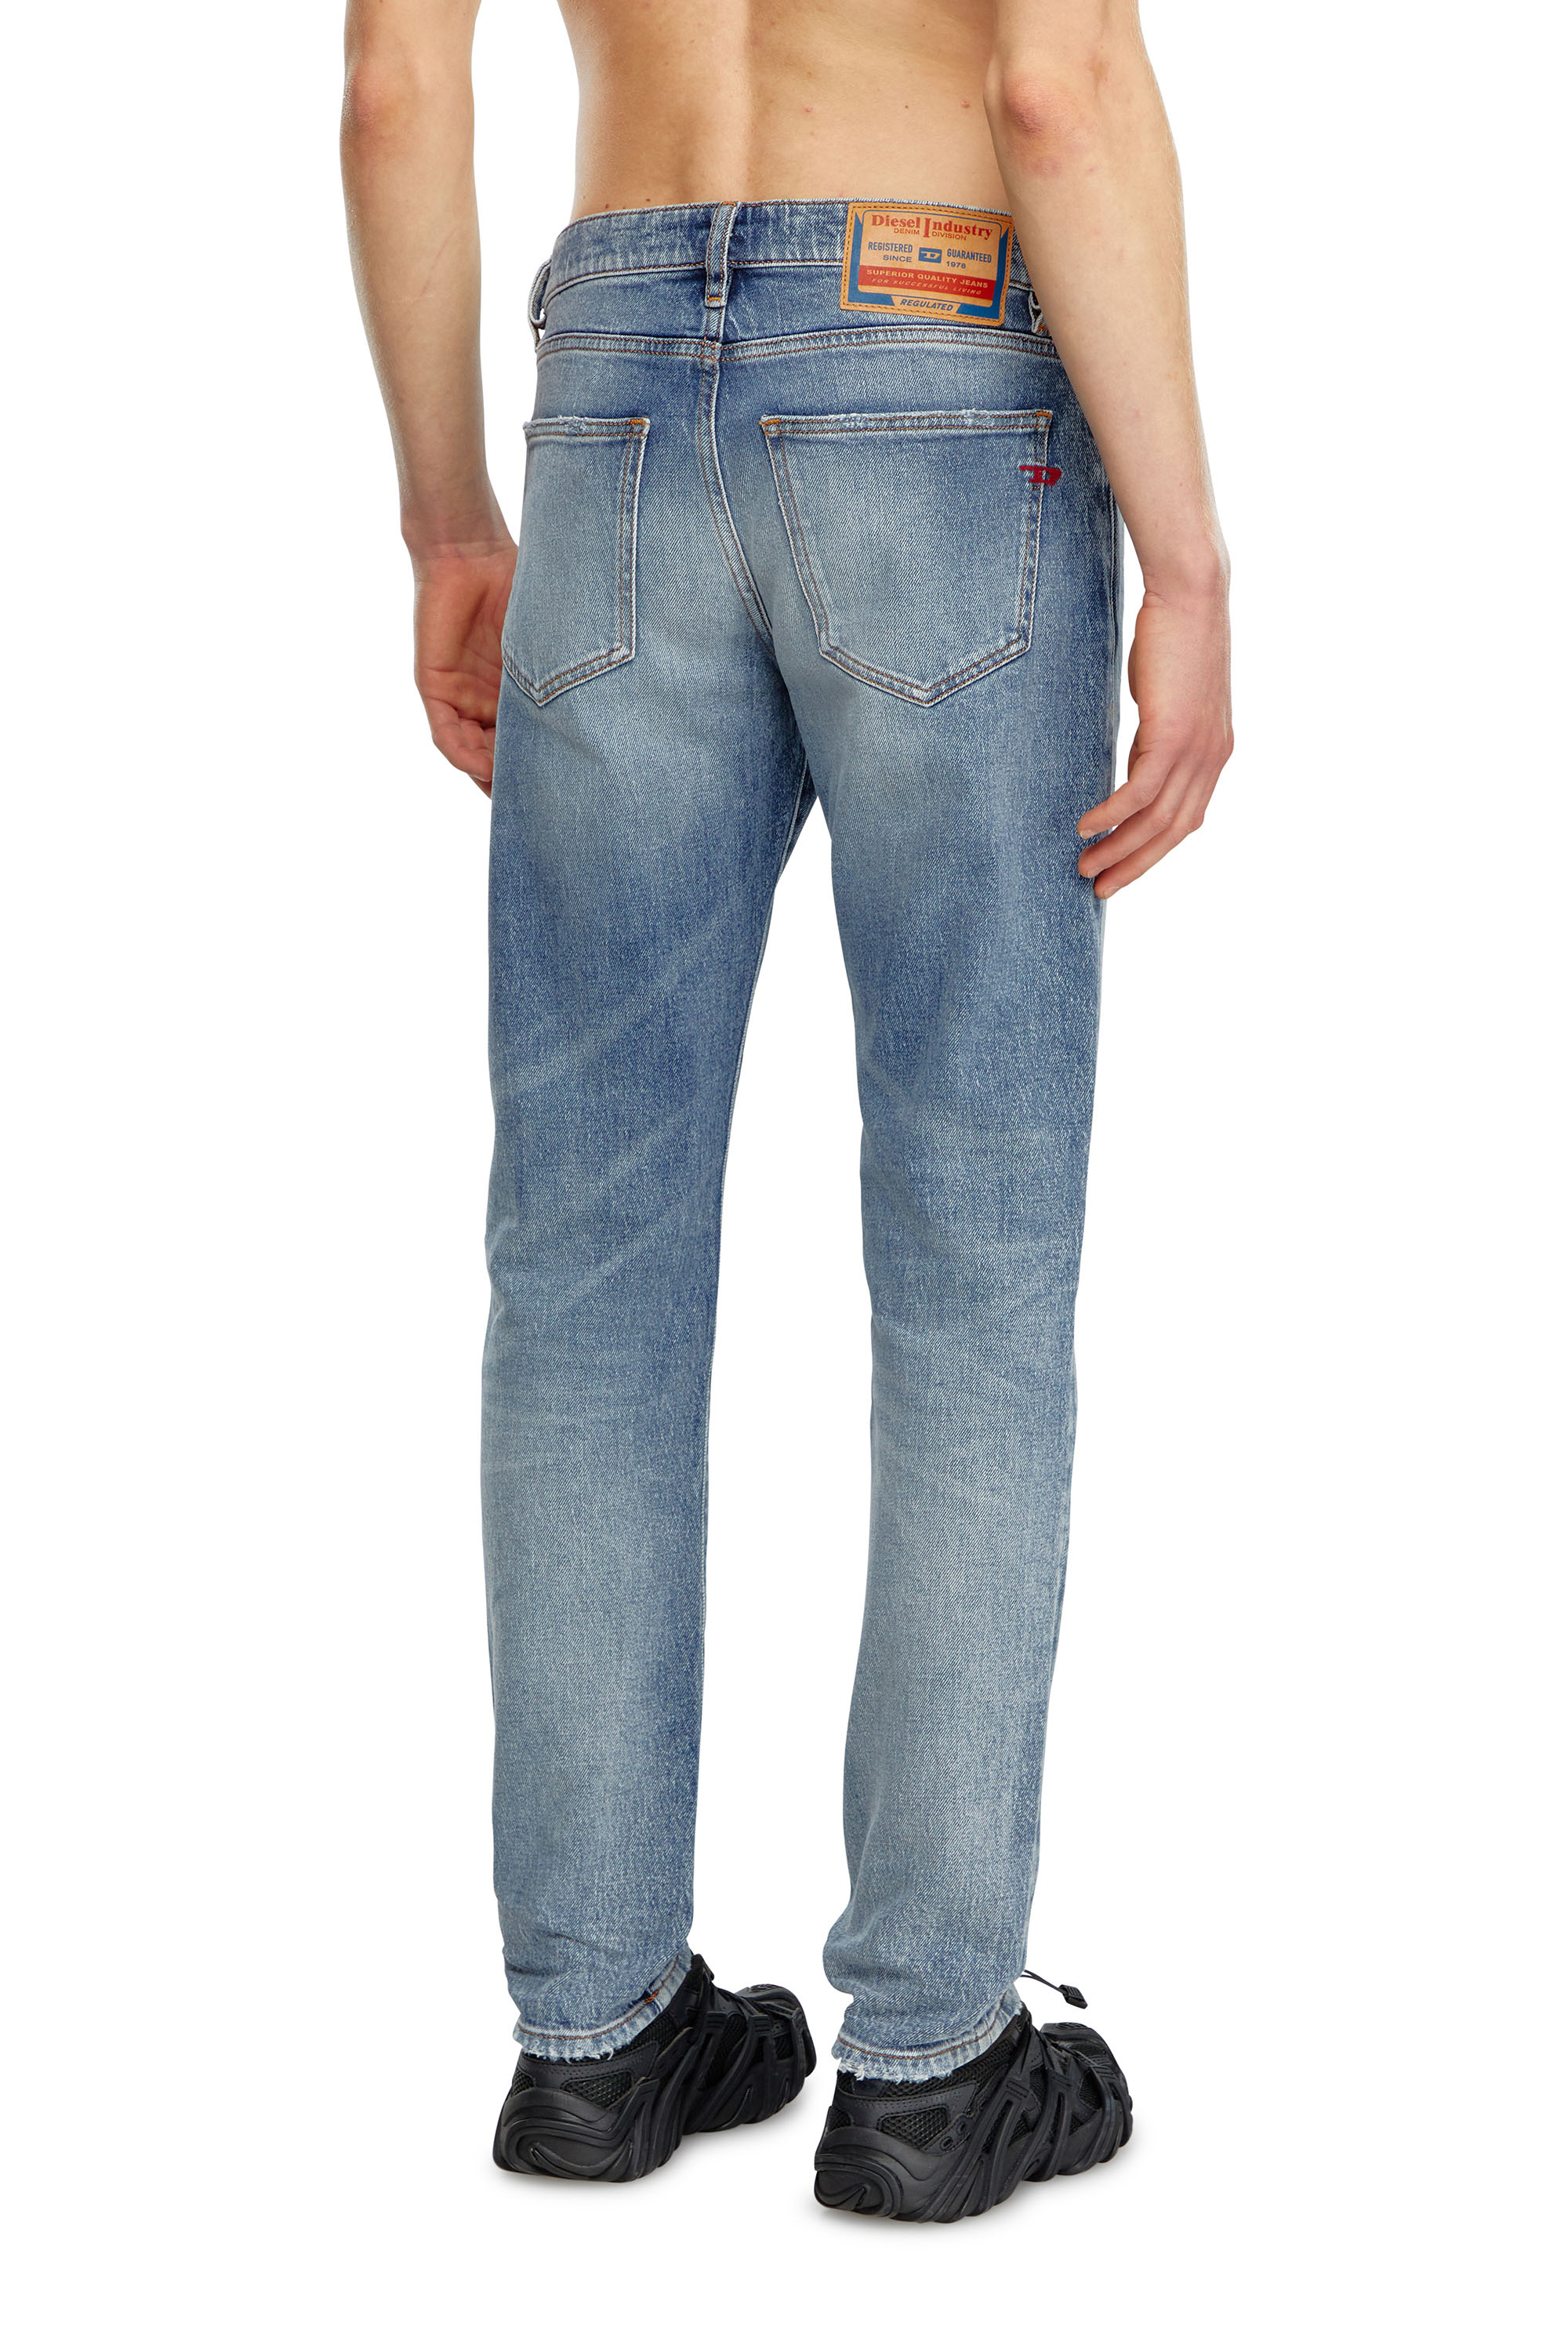 Diesel - Slim Jeans 2019 D-Strukt 09J57, Hombre Slim Jeans - 2019 D-Strukt in Azul marino - Image 3